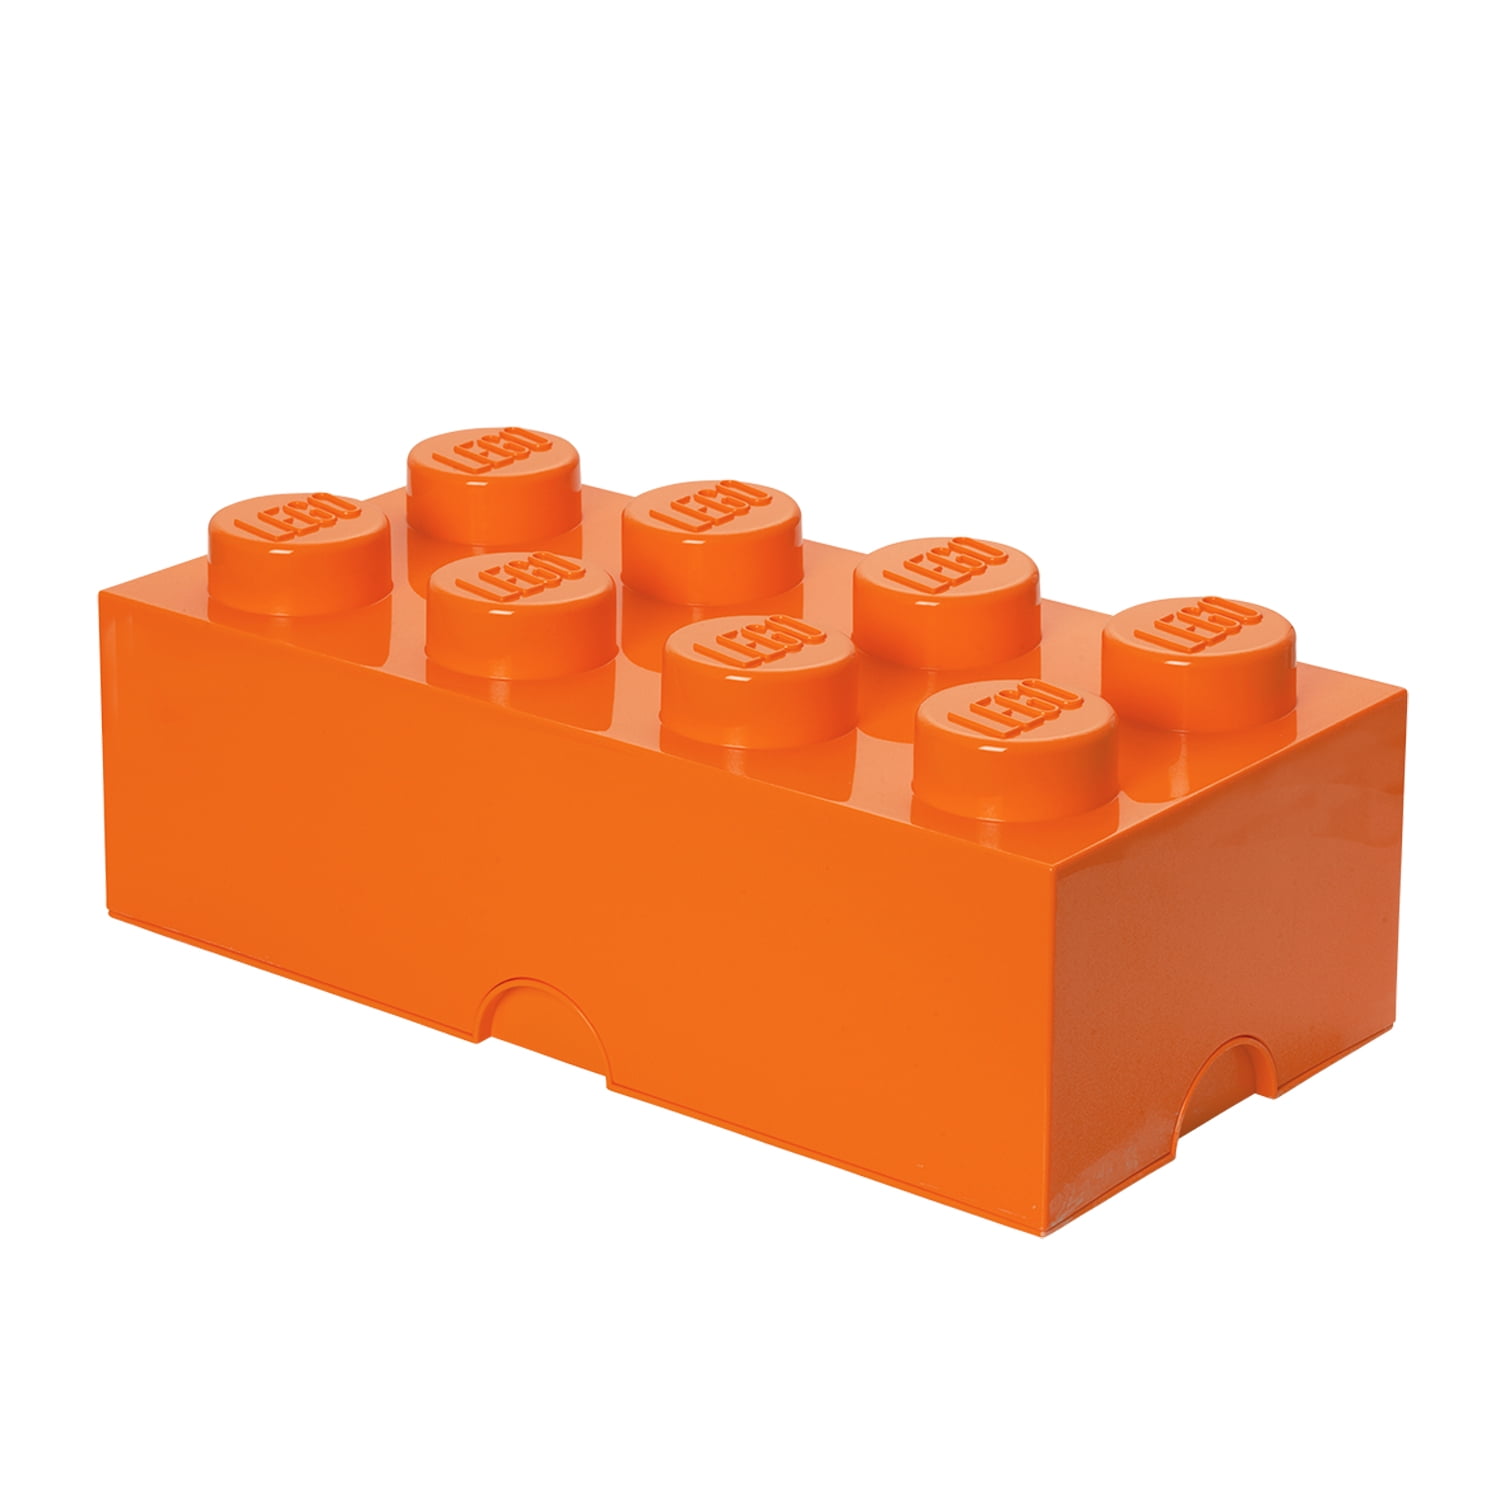 Lego tray Orange color - toys & games - by owner - sale - craigslist